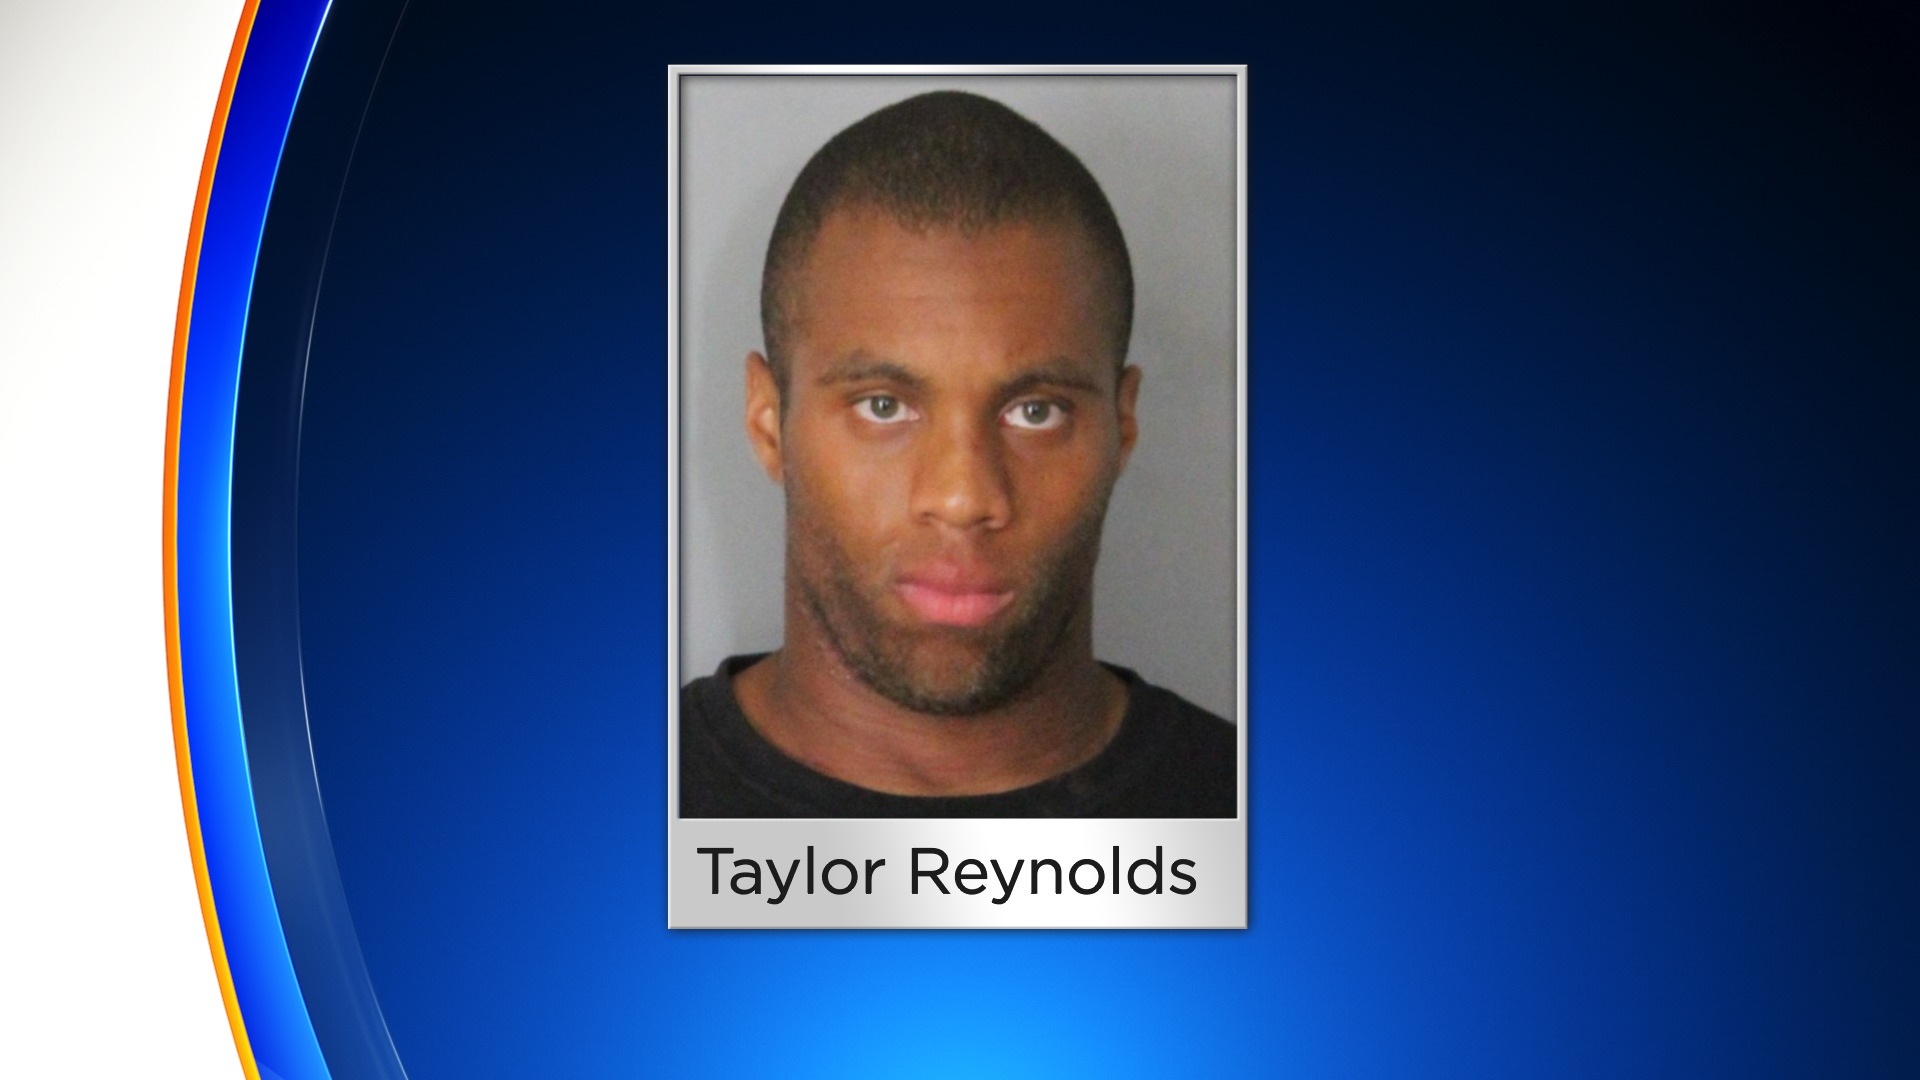 Taylor Reynolds - police recruit arrested